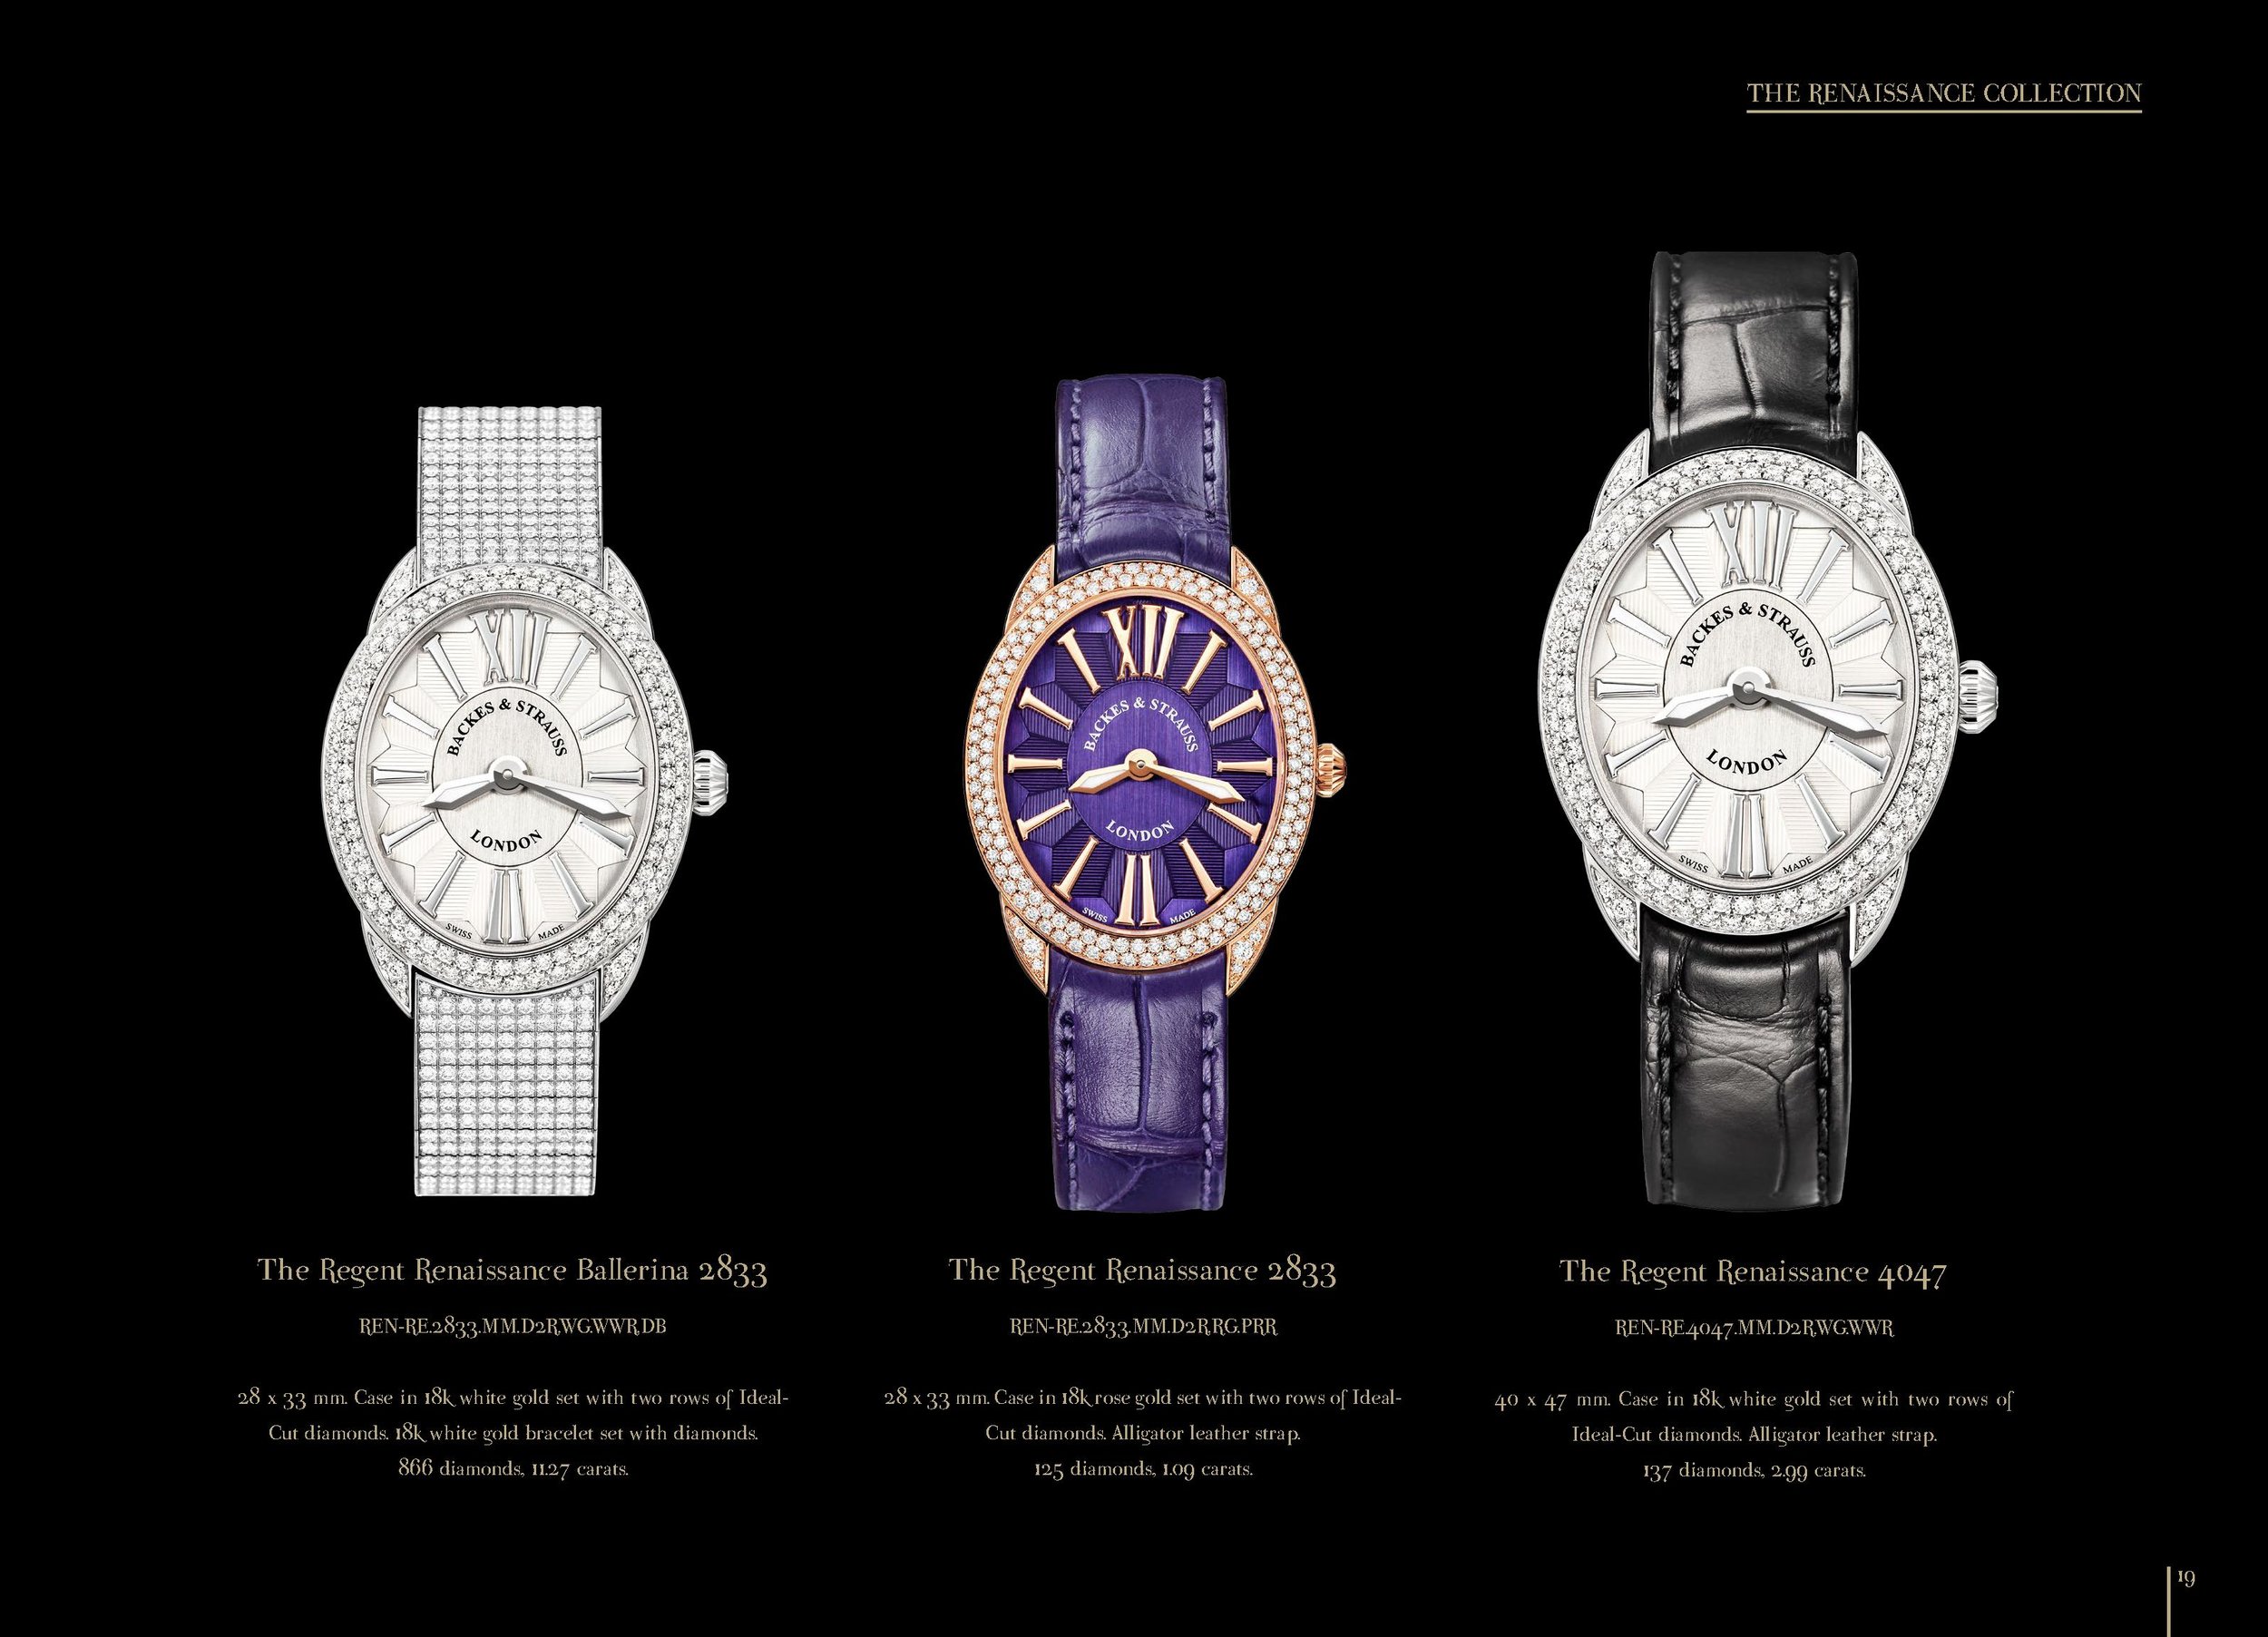 Regent Renaissance collection watch